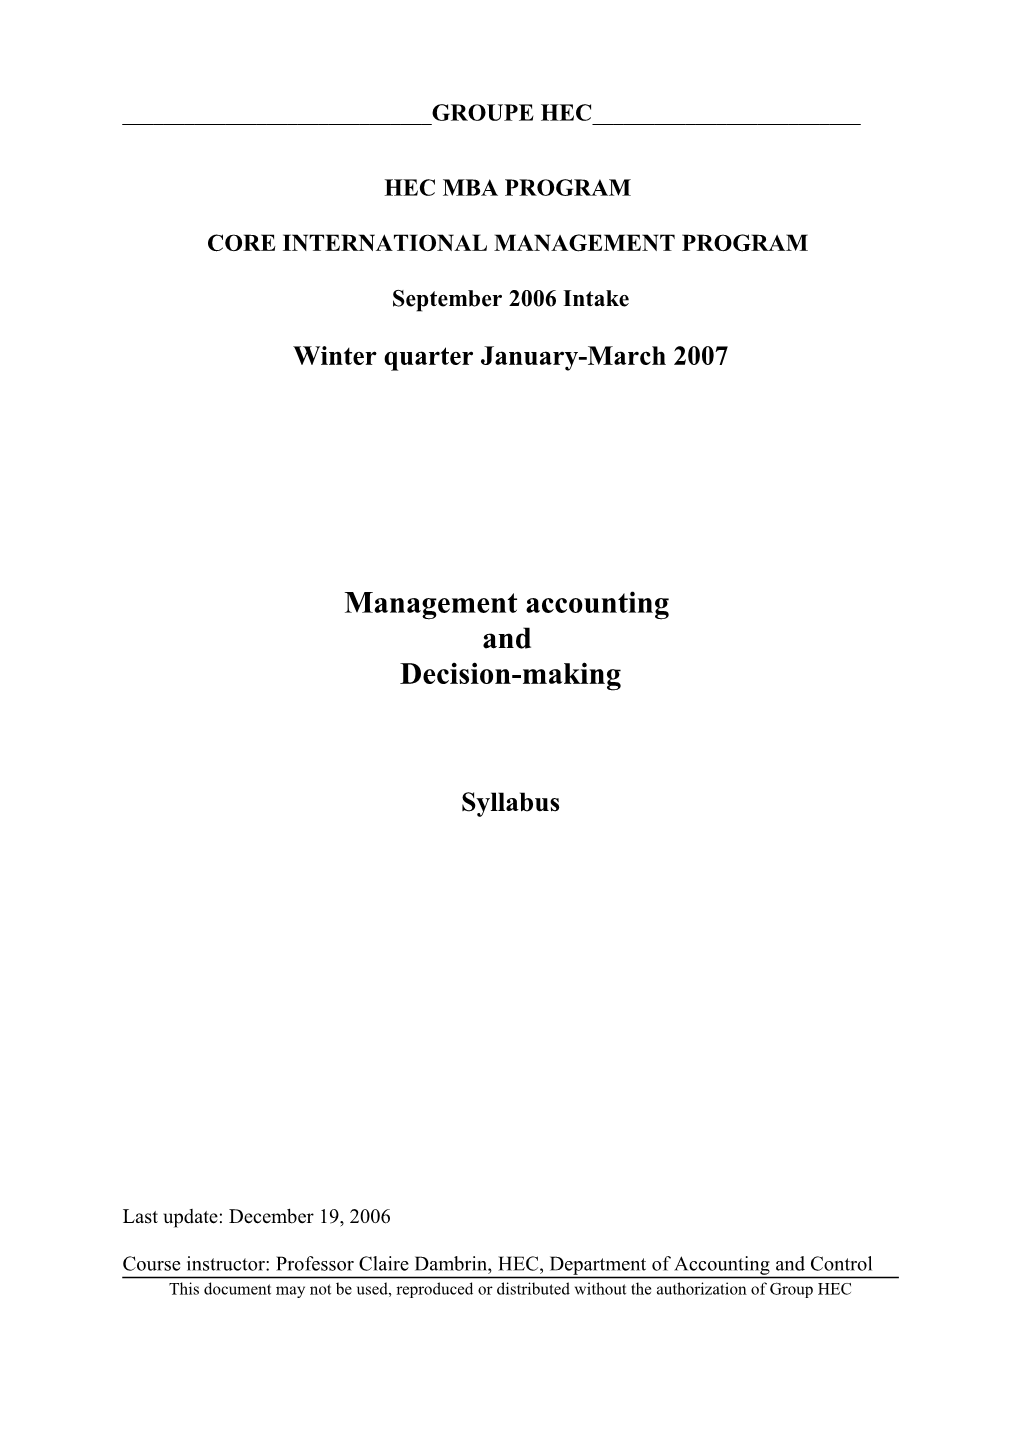 Core International Management Program